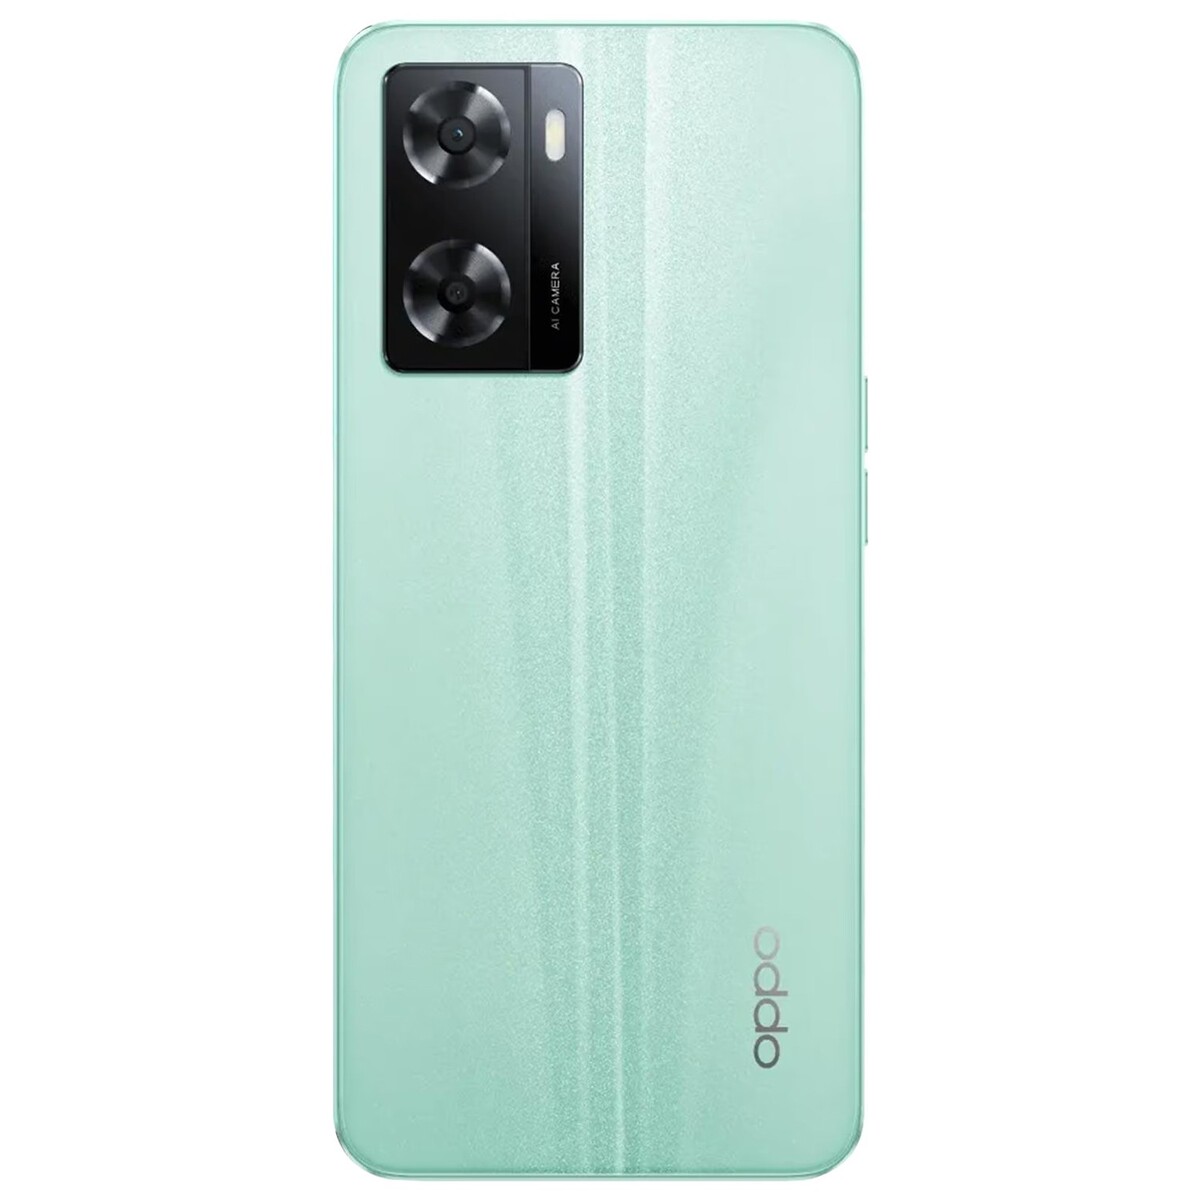 Oppo A57 4GB/64GB Glowing Green